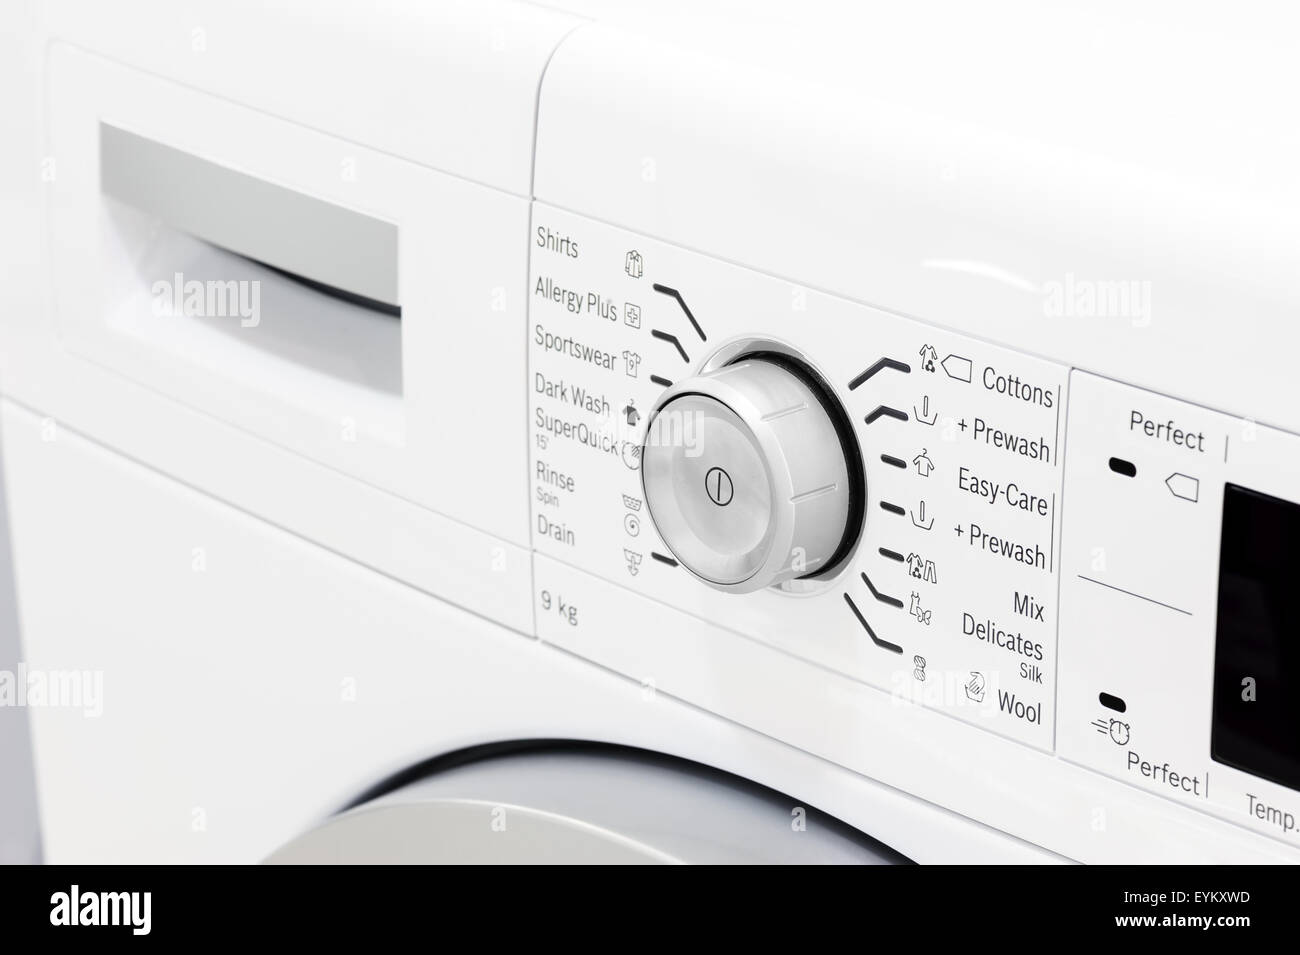 washing machine's control panel Stock Photo